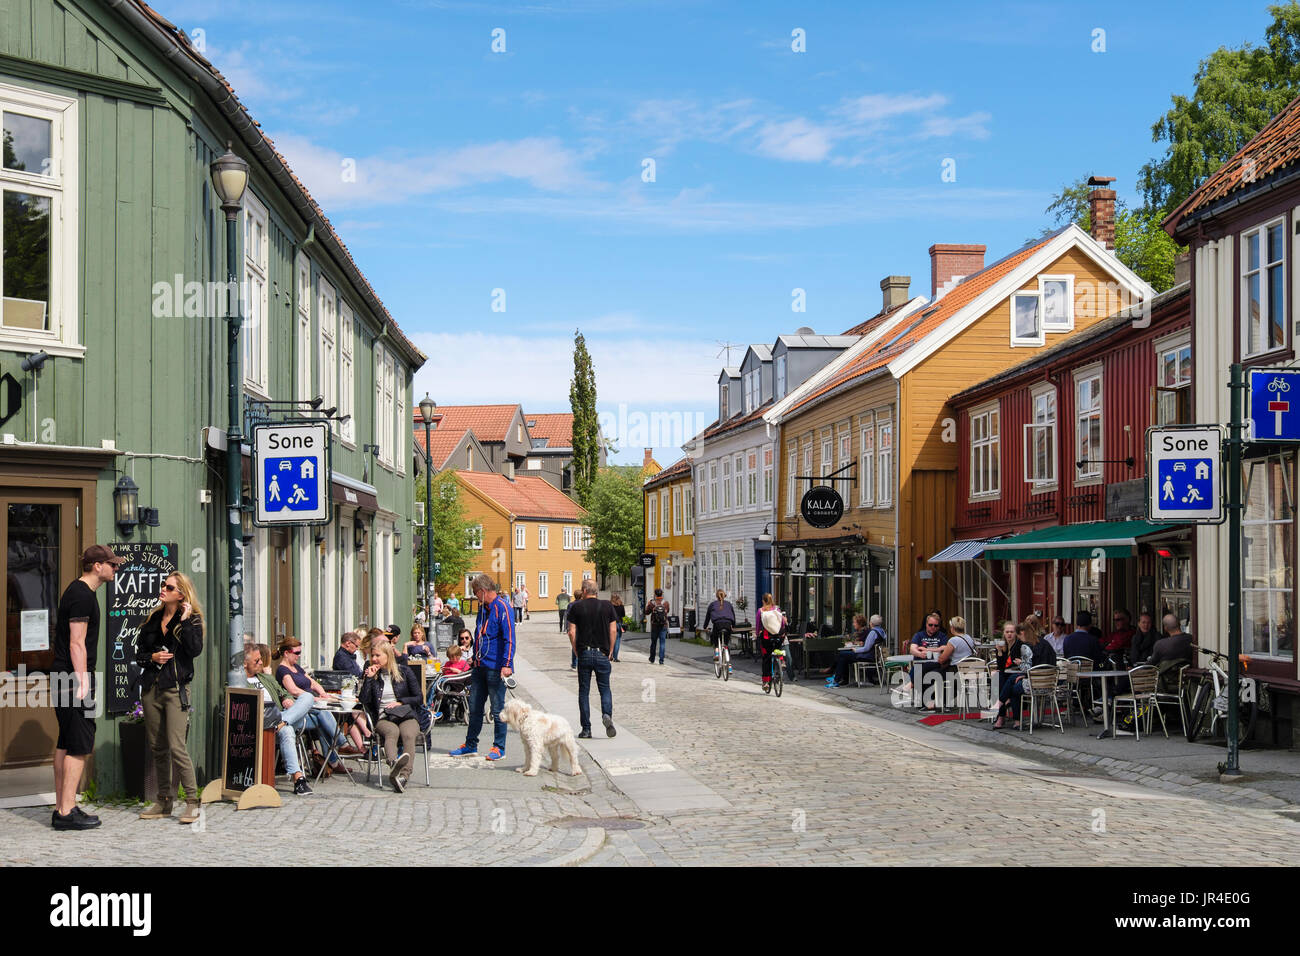 Cafes and people in pedestrian cobbled street scene with old buildings. Nedre Bakkelandet, Bakke Landet, Trondheim, Norway Stock Photo